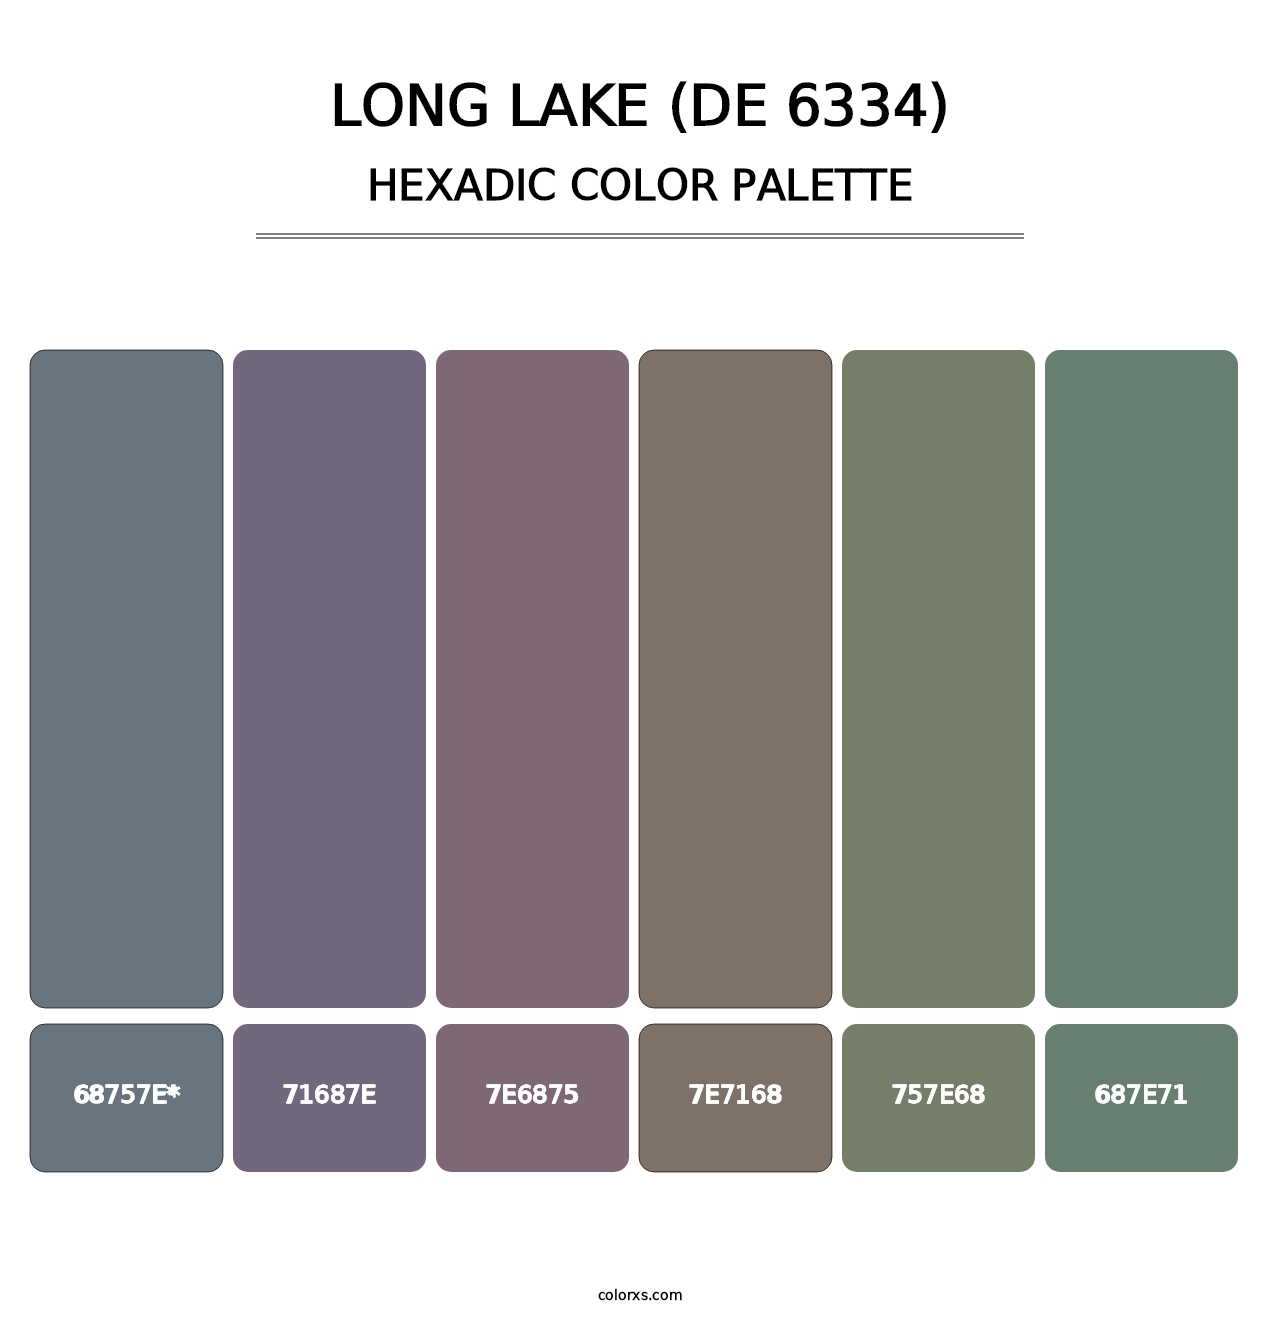 Long Lake (DE 6334) - Hexadic Color Palette